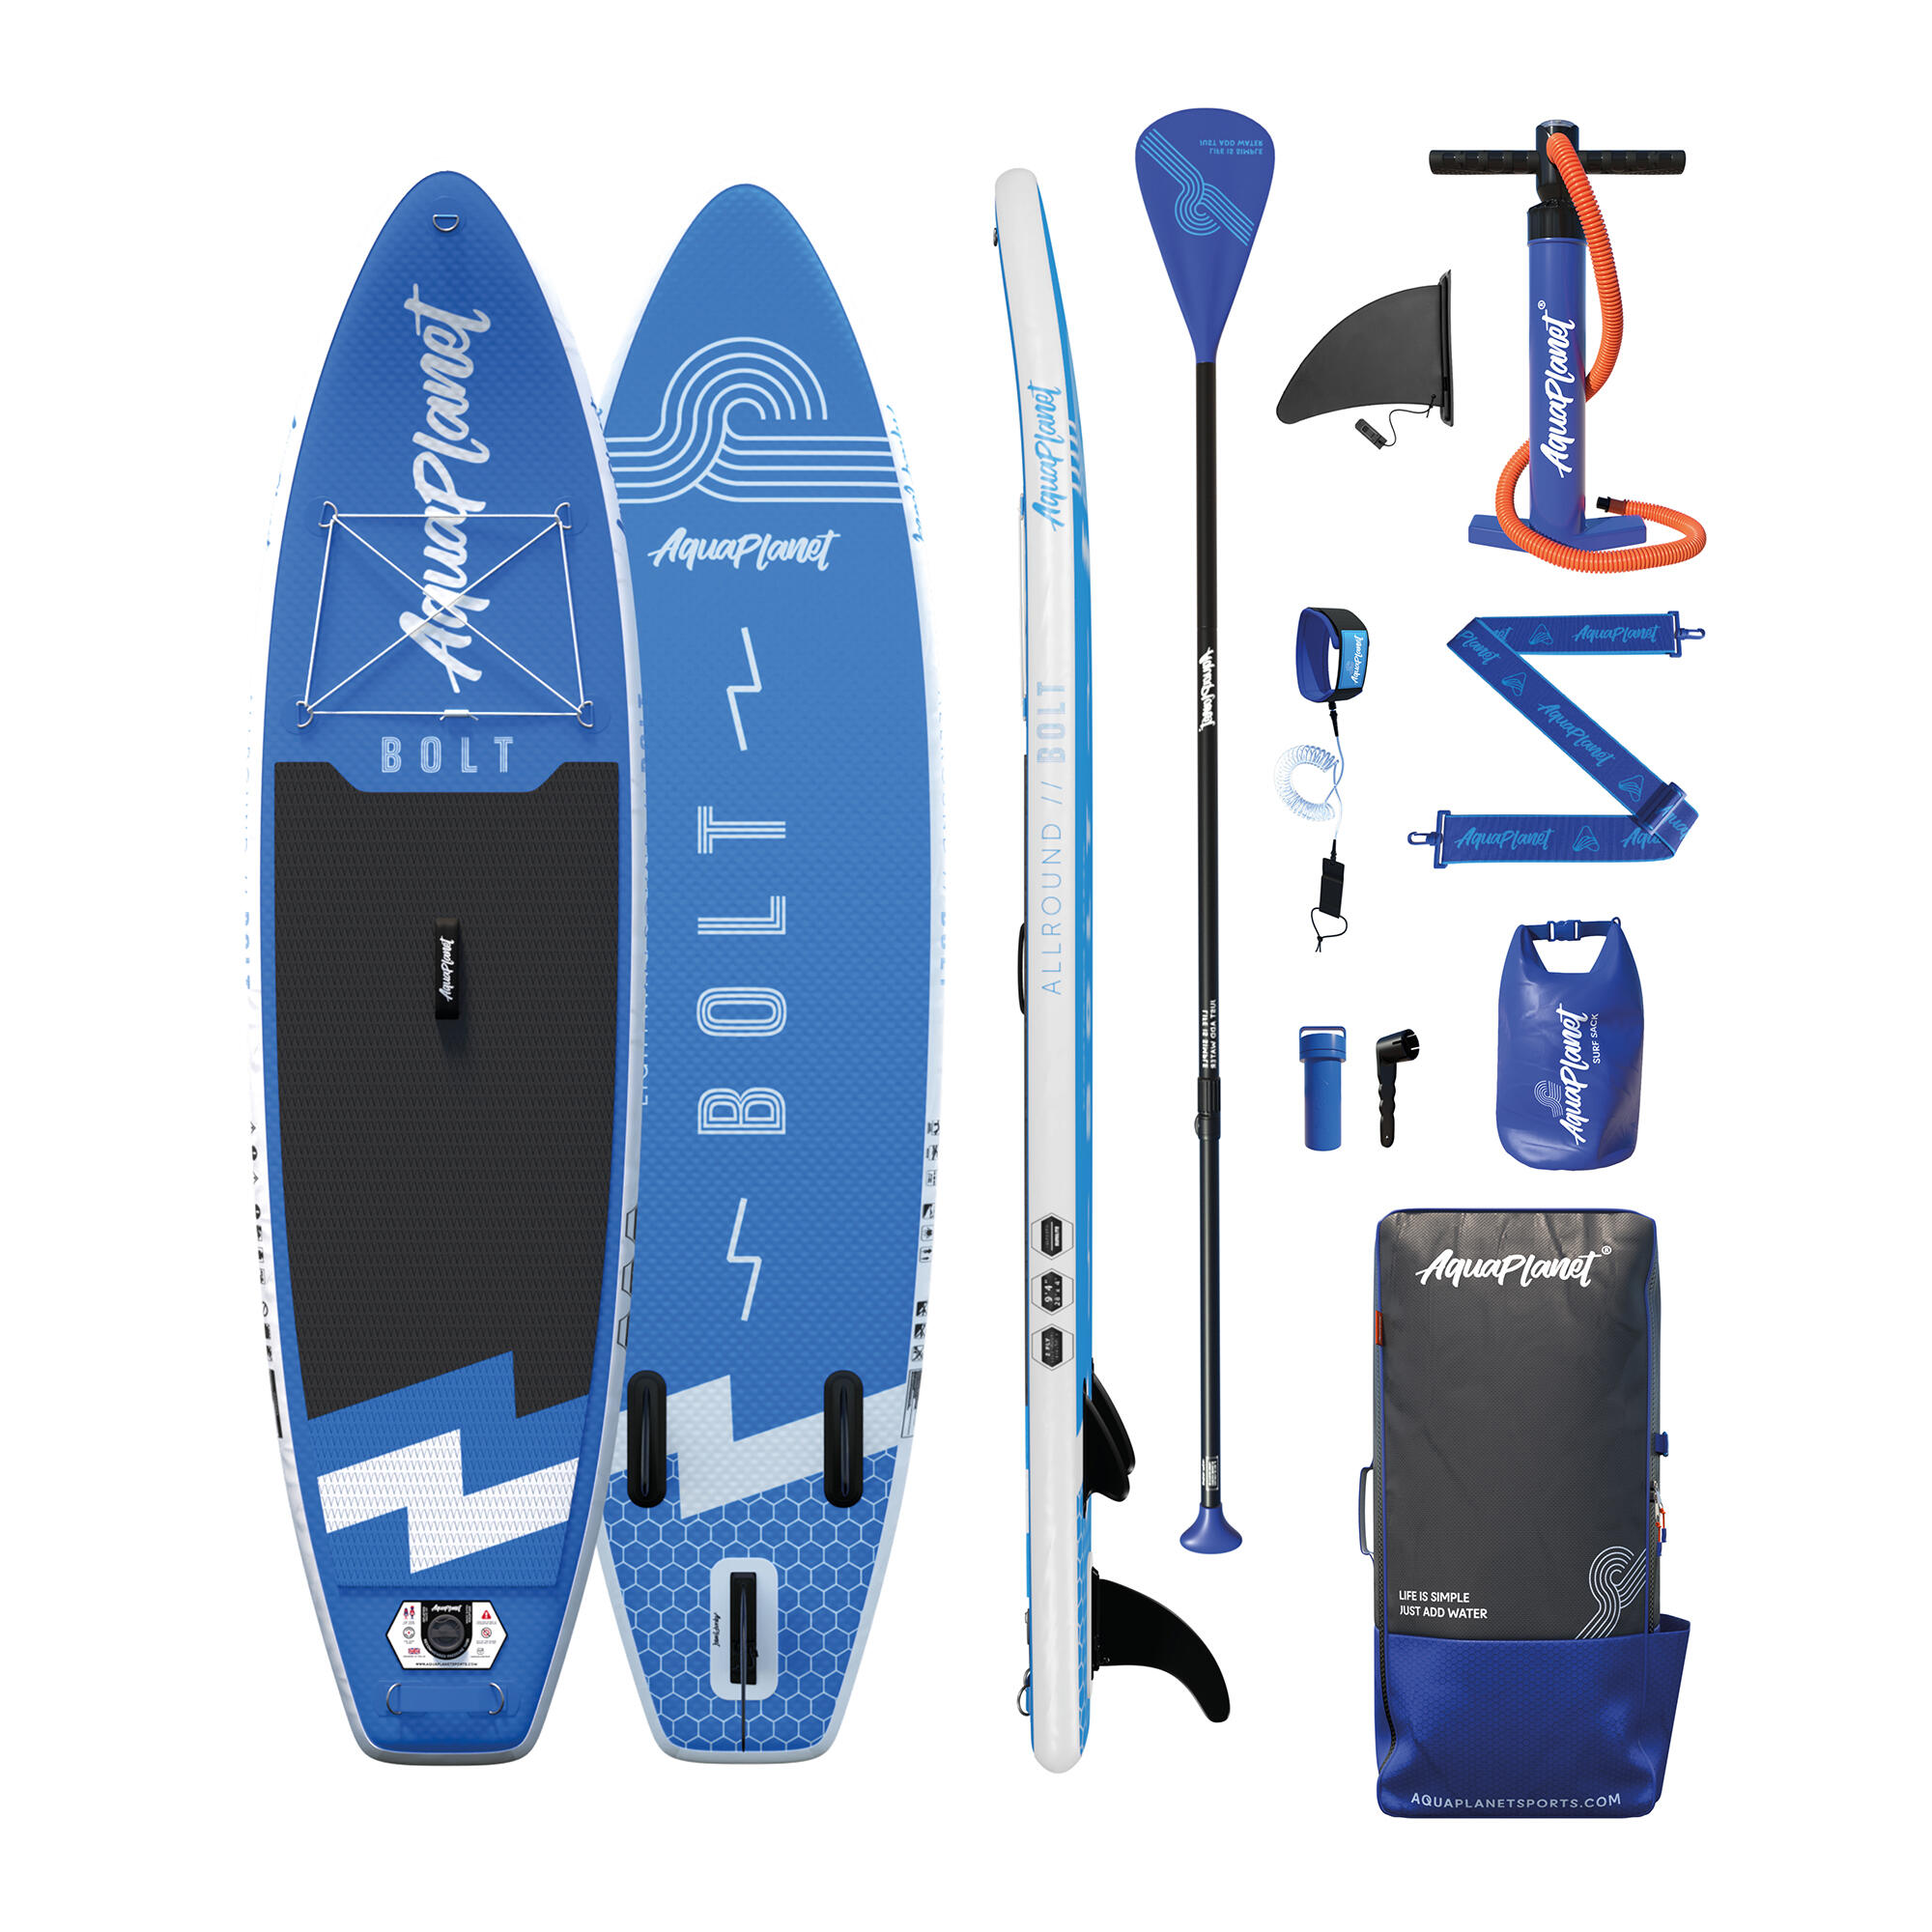 AQUAPLANET Aquaplanet BOLT 9'4 Junior Inflatable Paddle Board Package - Blue